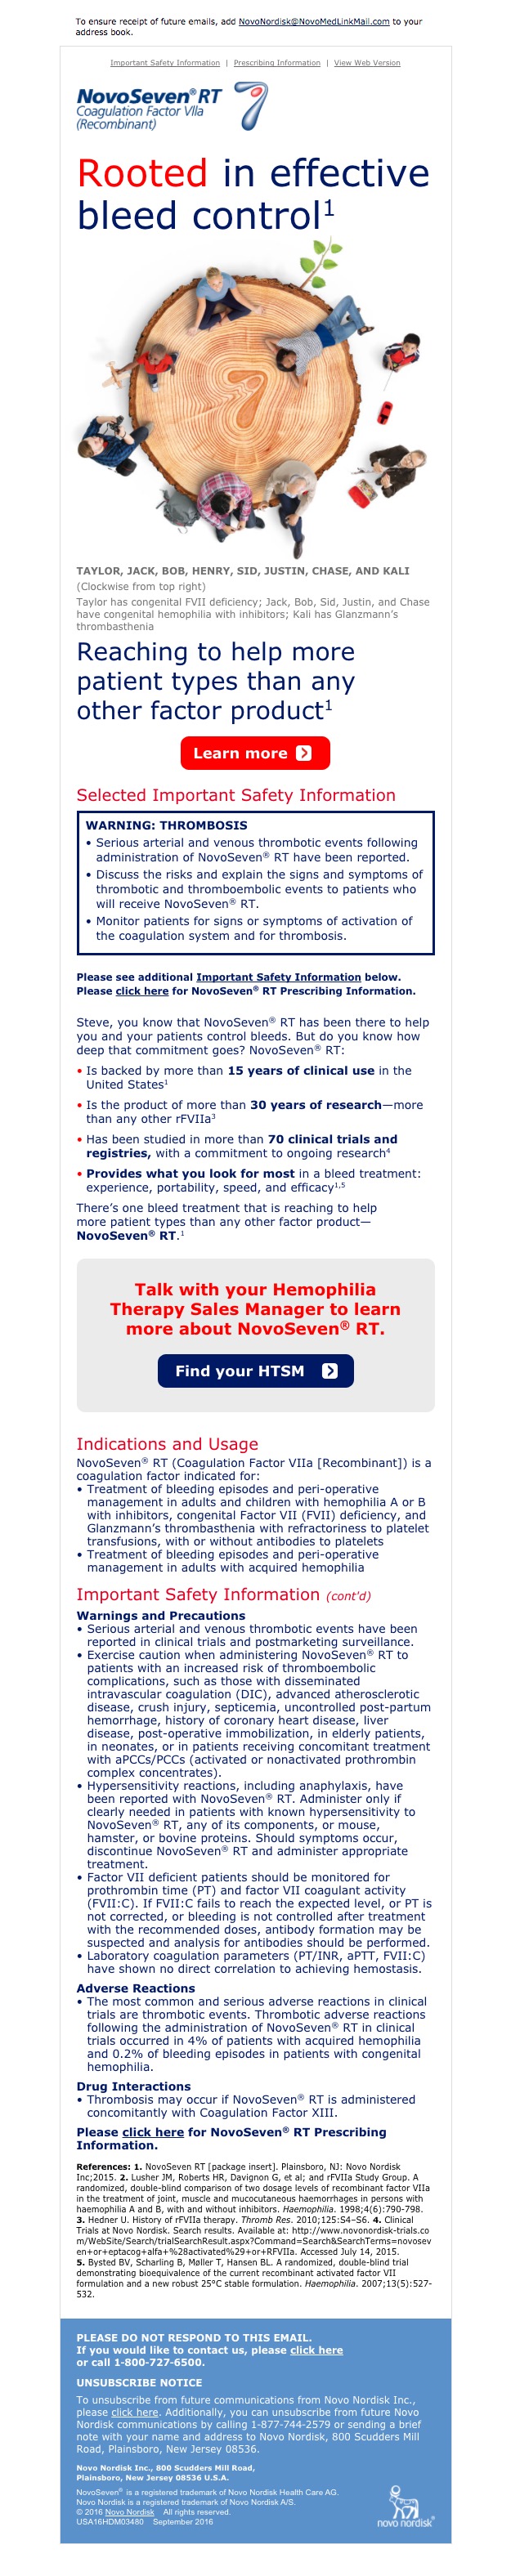 Novo Nordisk Hemophilia HCP Email Program (eCRM): Email 1